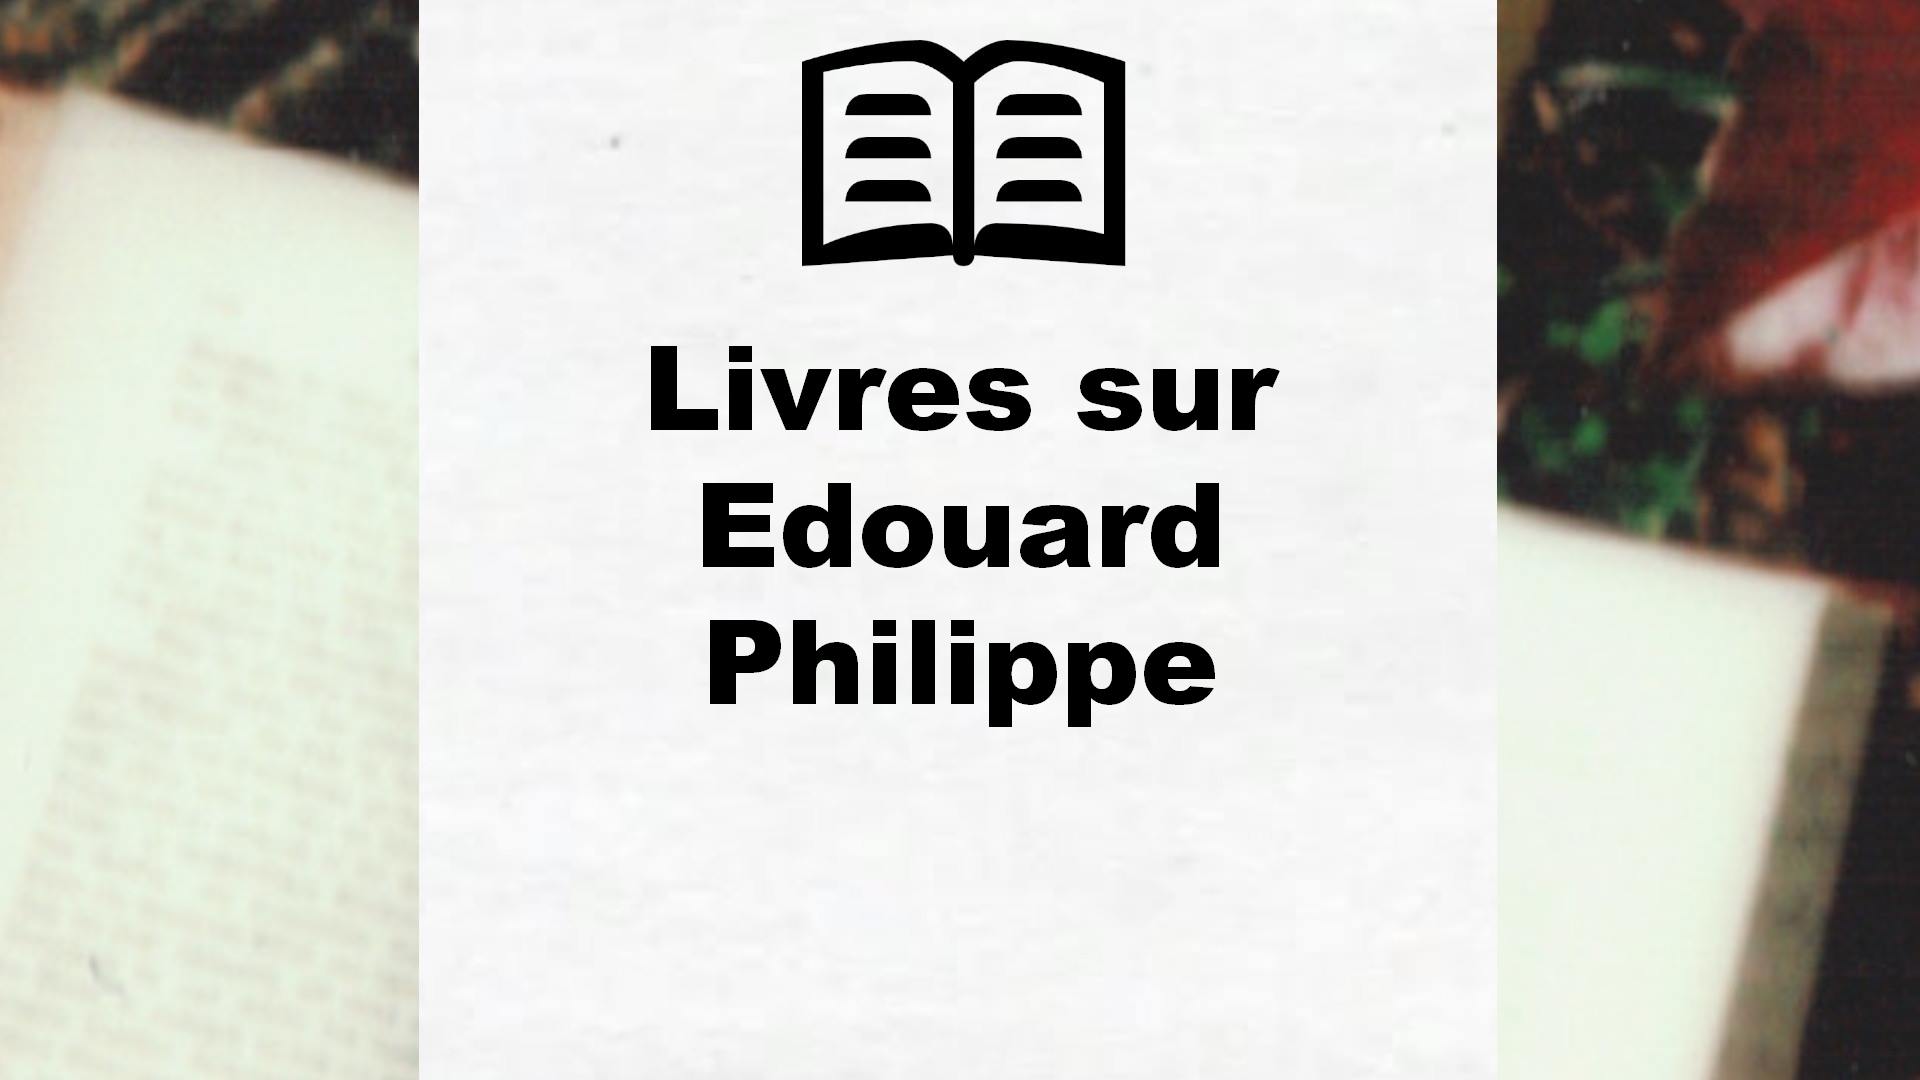 Livres sur Edouard Philippe